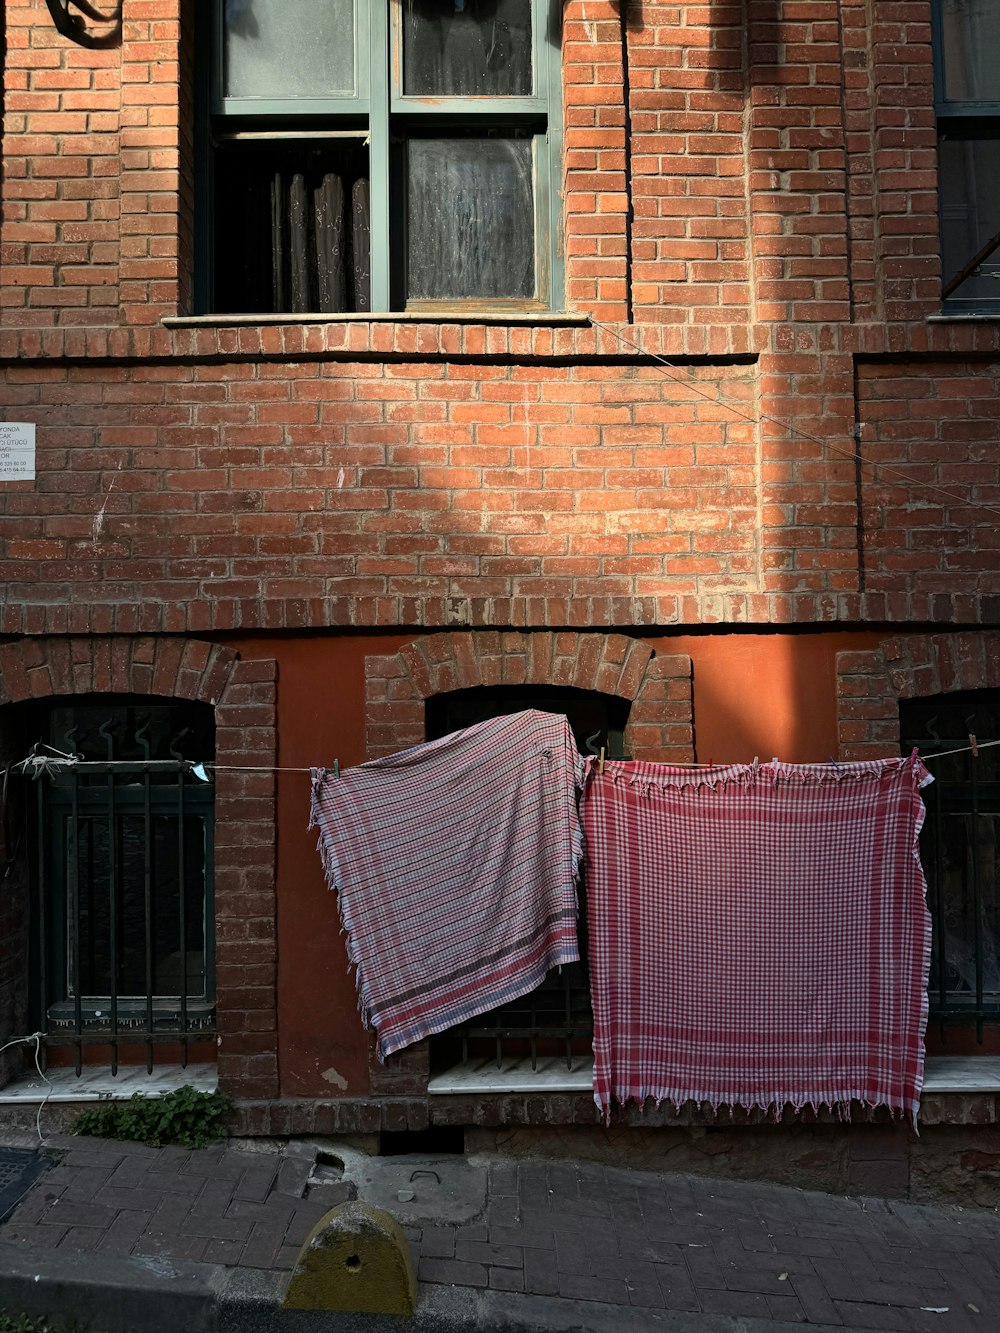 Un edificio de ladrillo rojo con ropa tendida para secarse